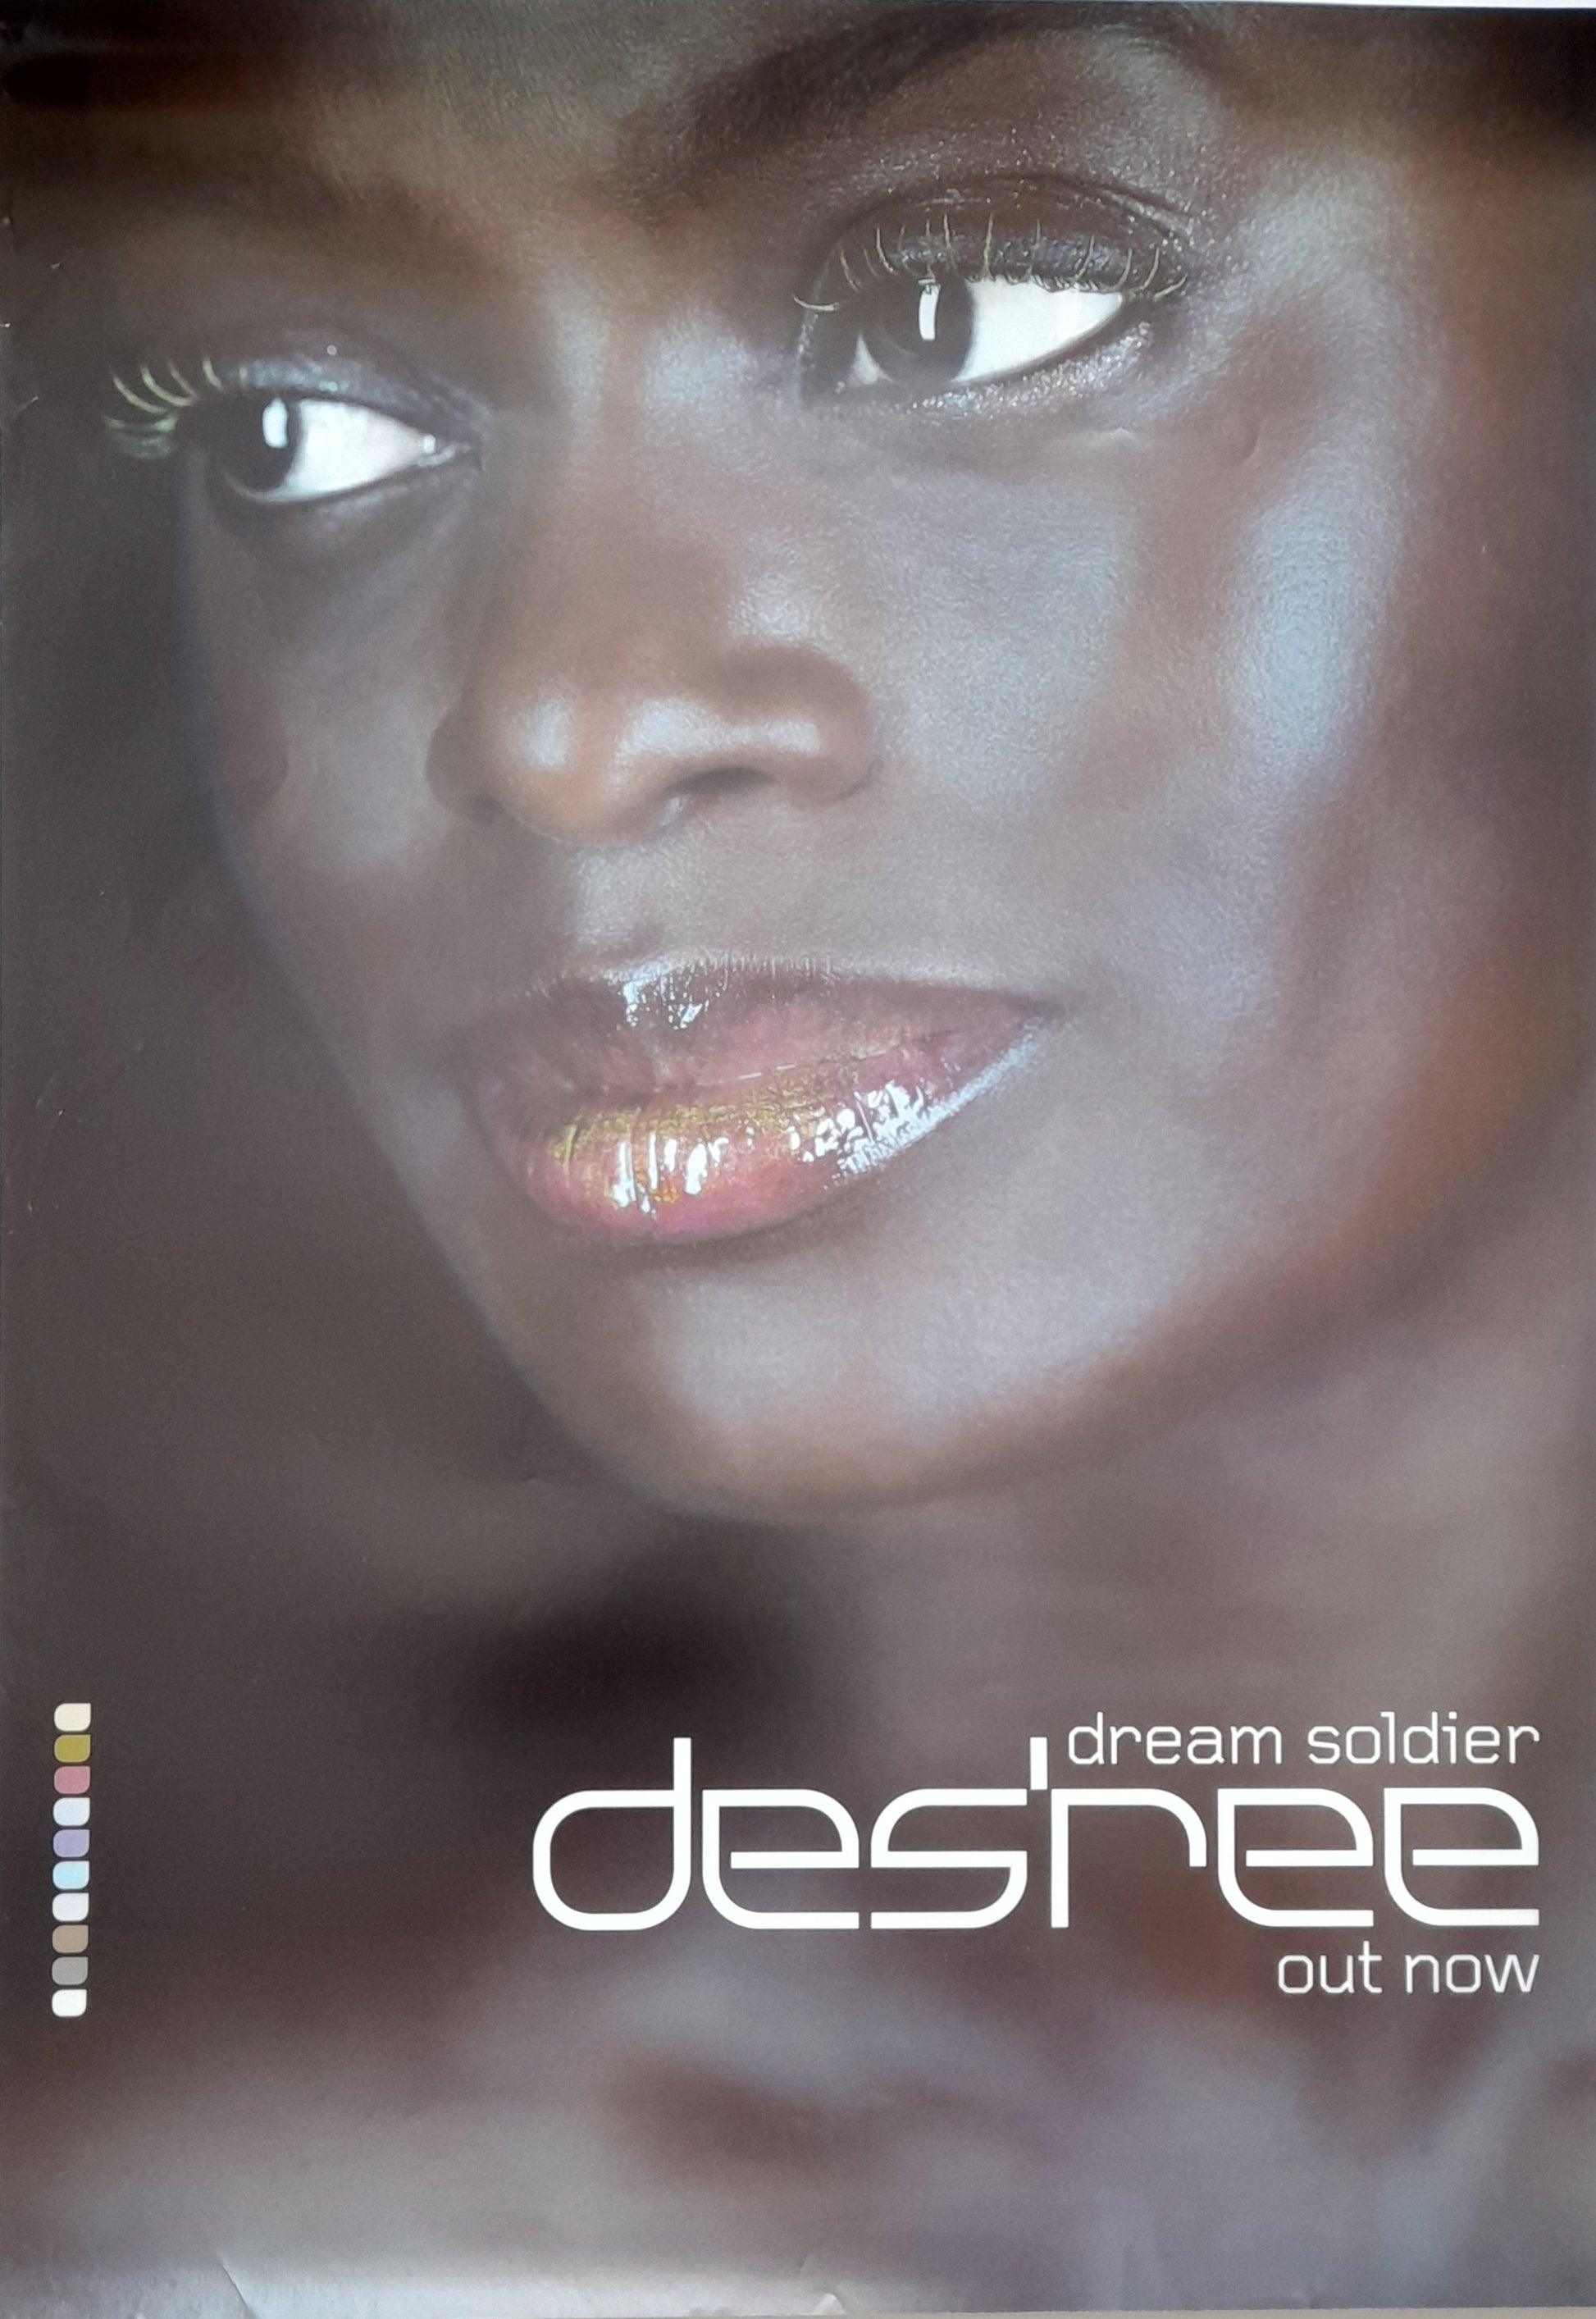 Des'ree Dream Soldier Album UK Promotional Poster